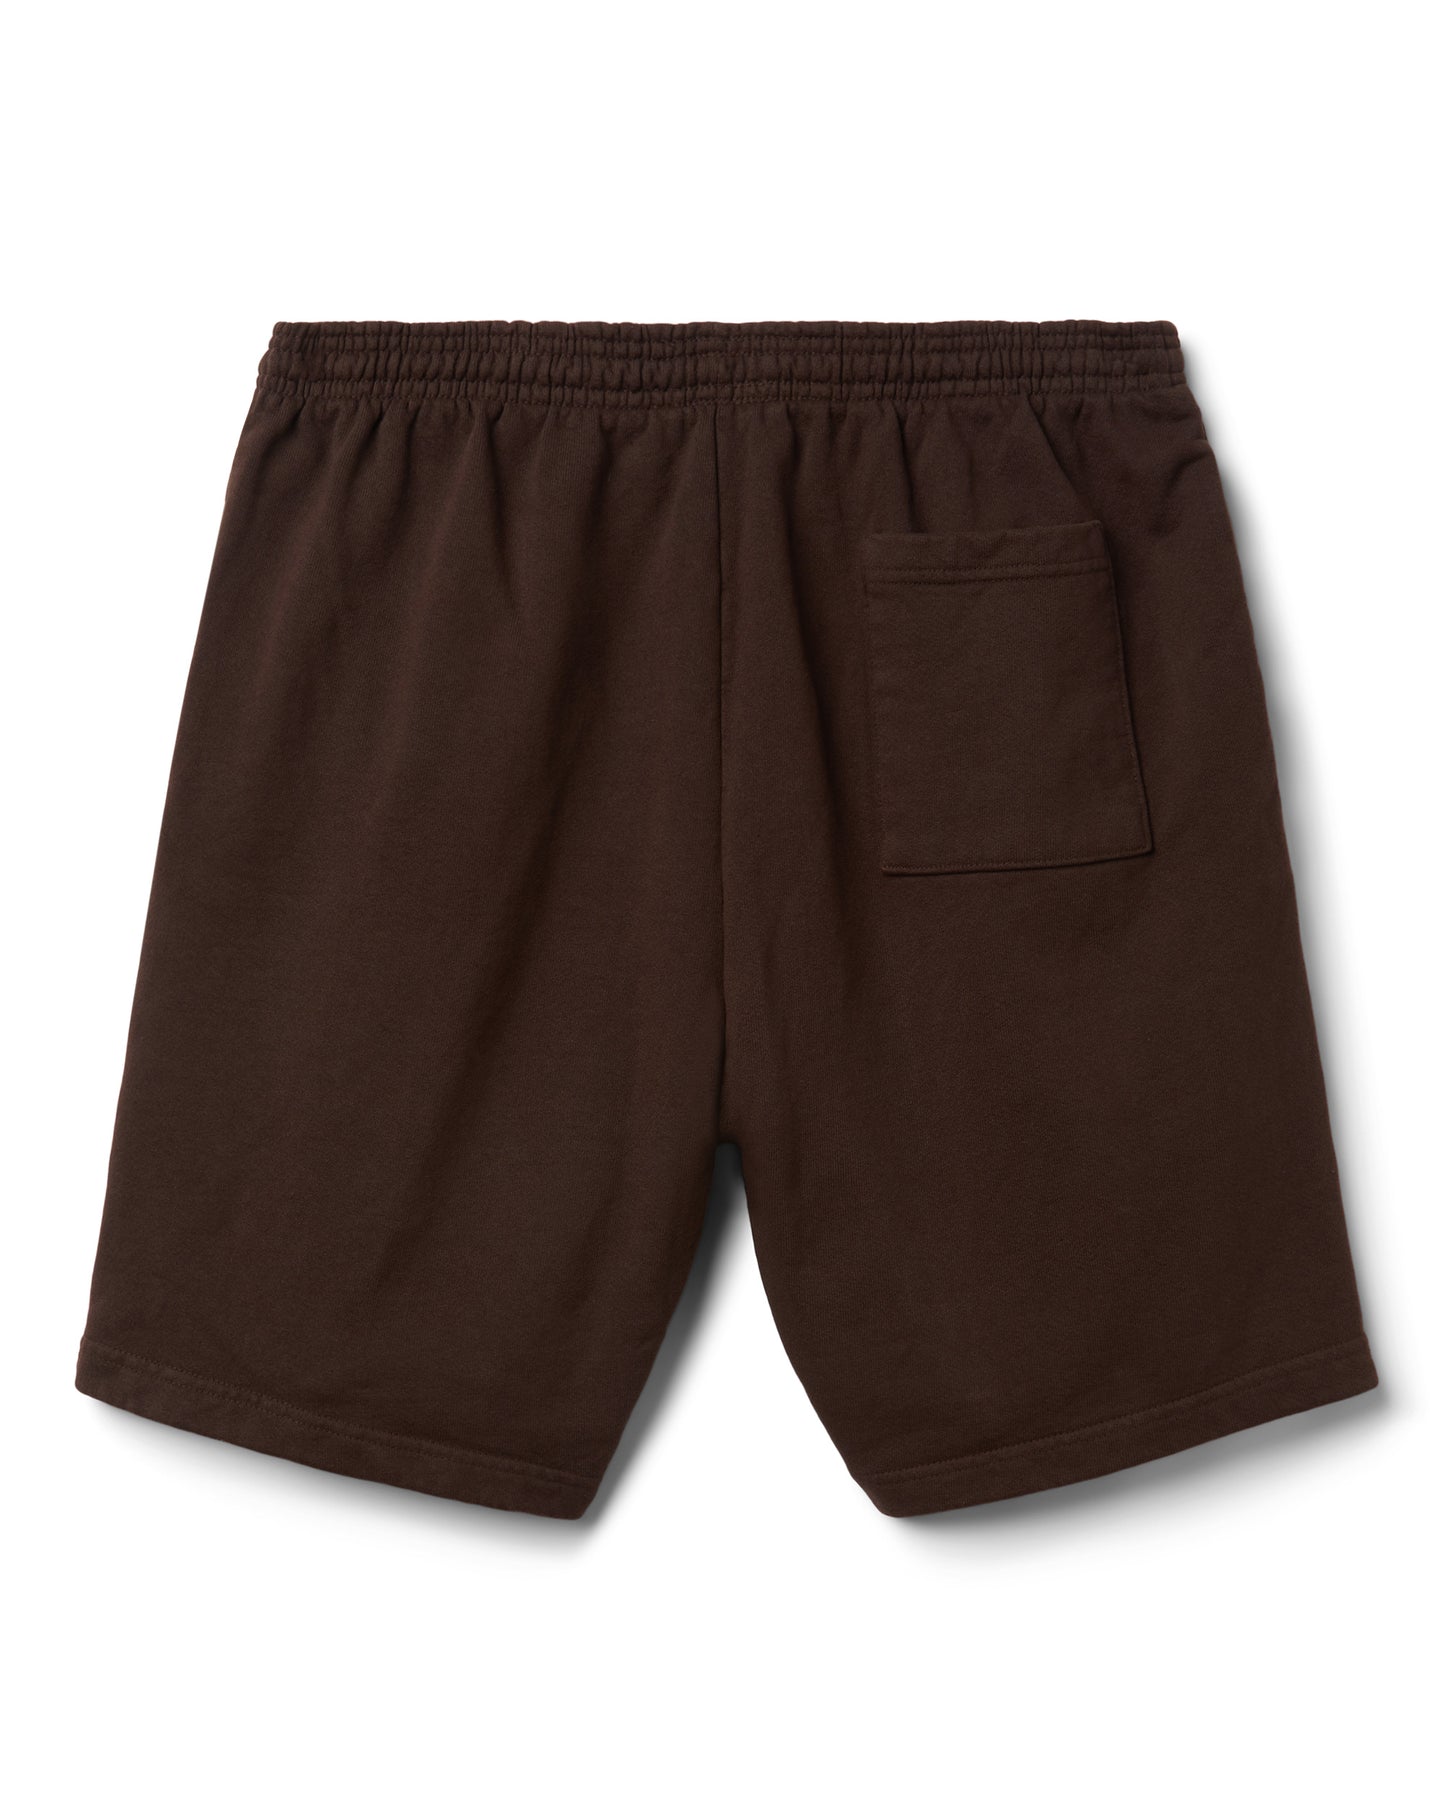 TxDxE Shorts (Brown)